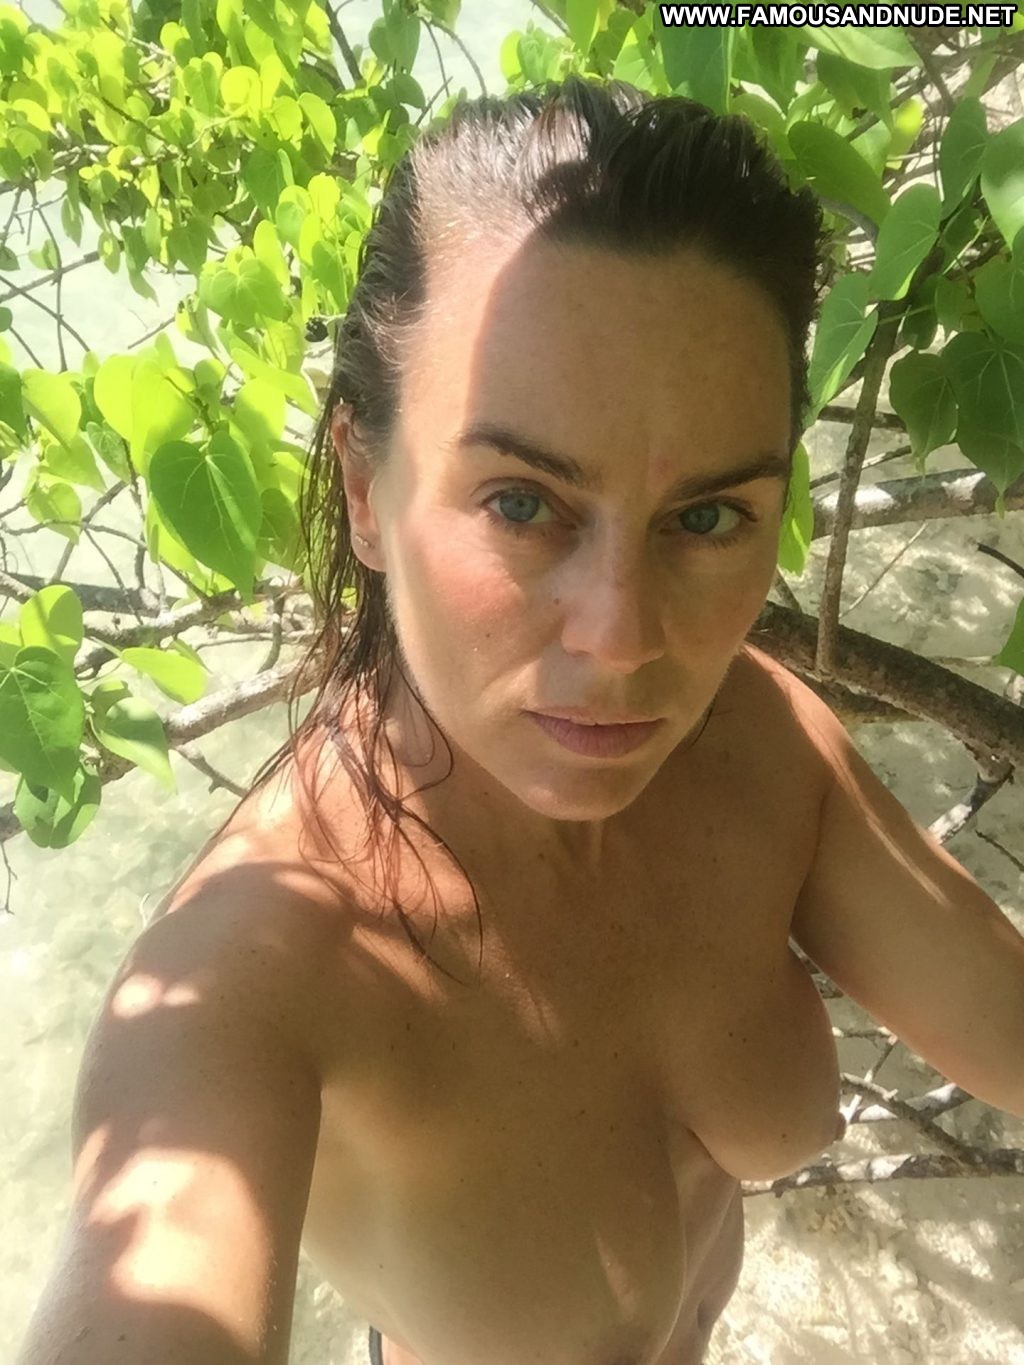 Nude pics leaked celeb Celebrity Nude